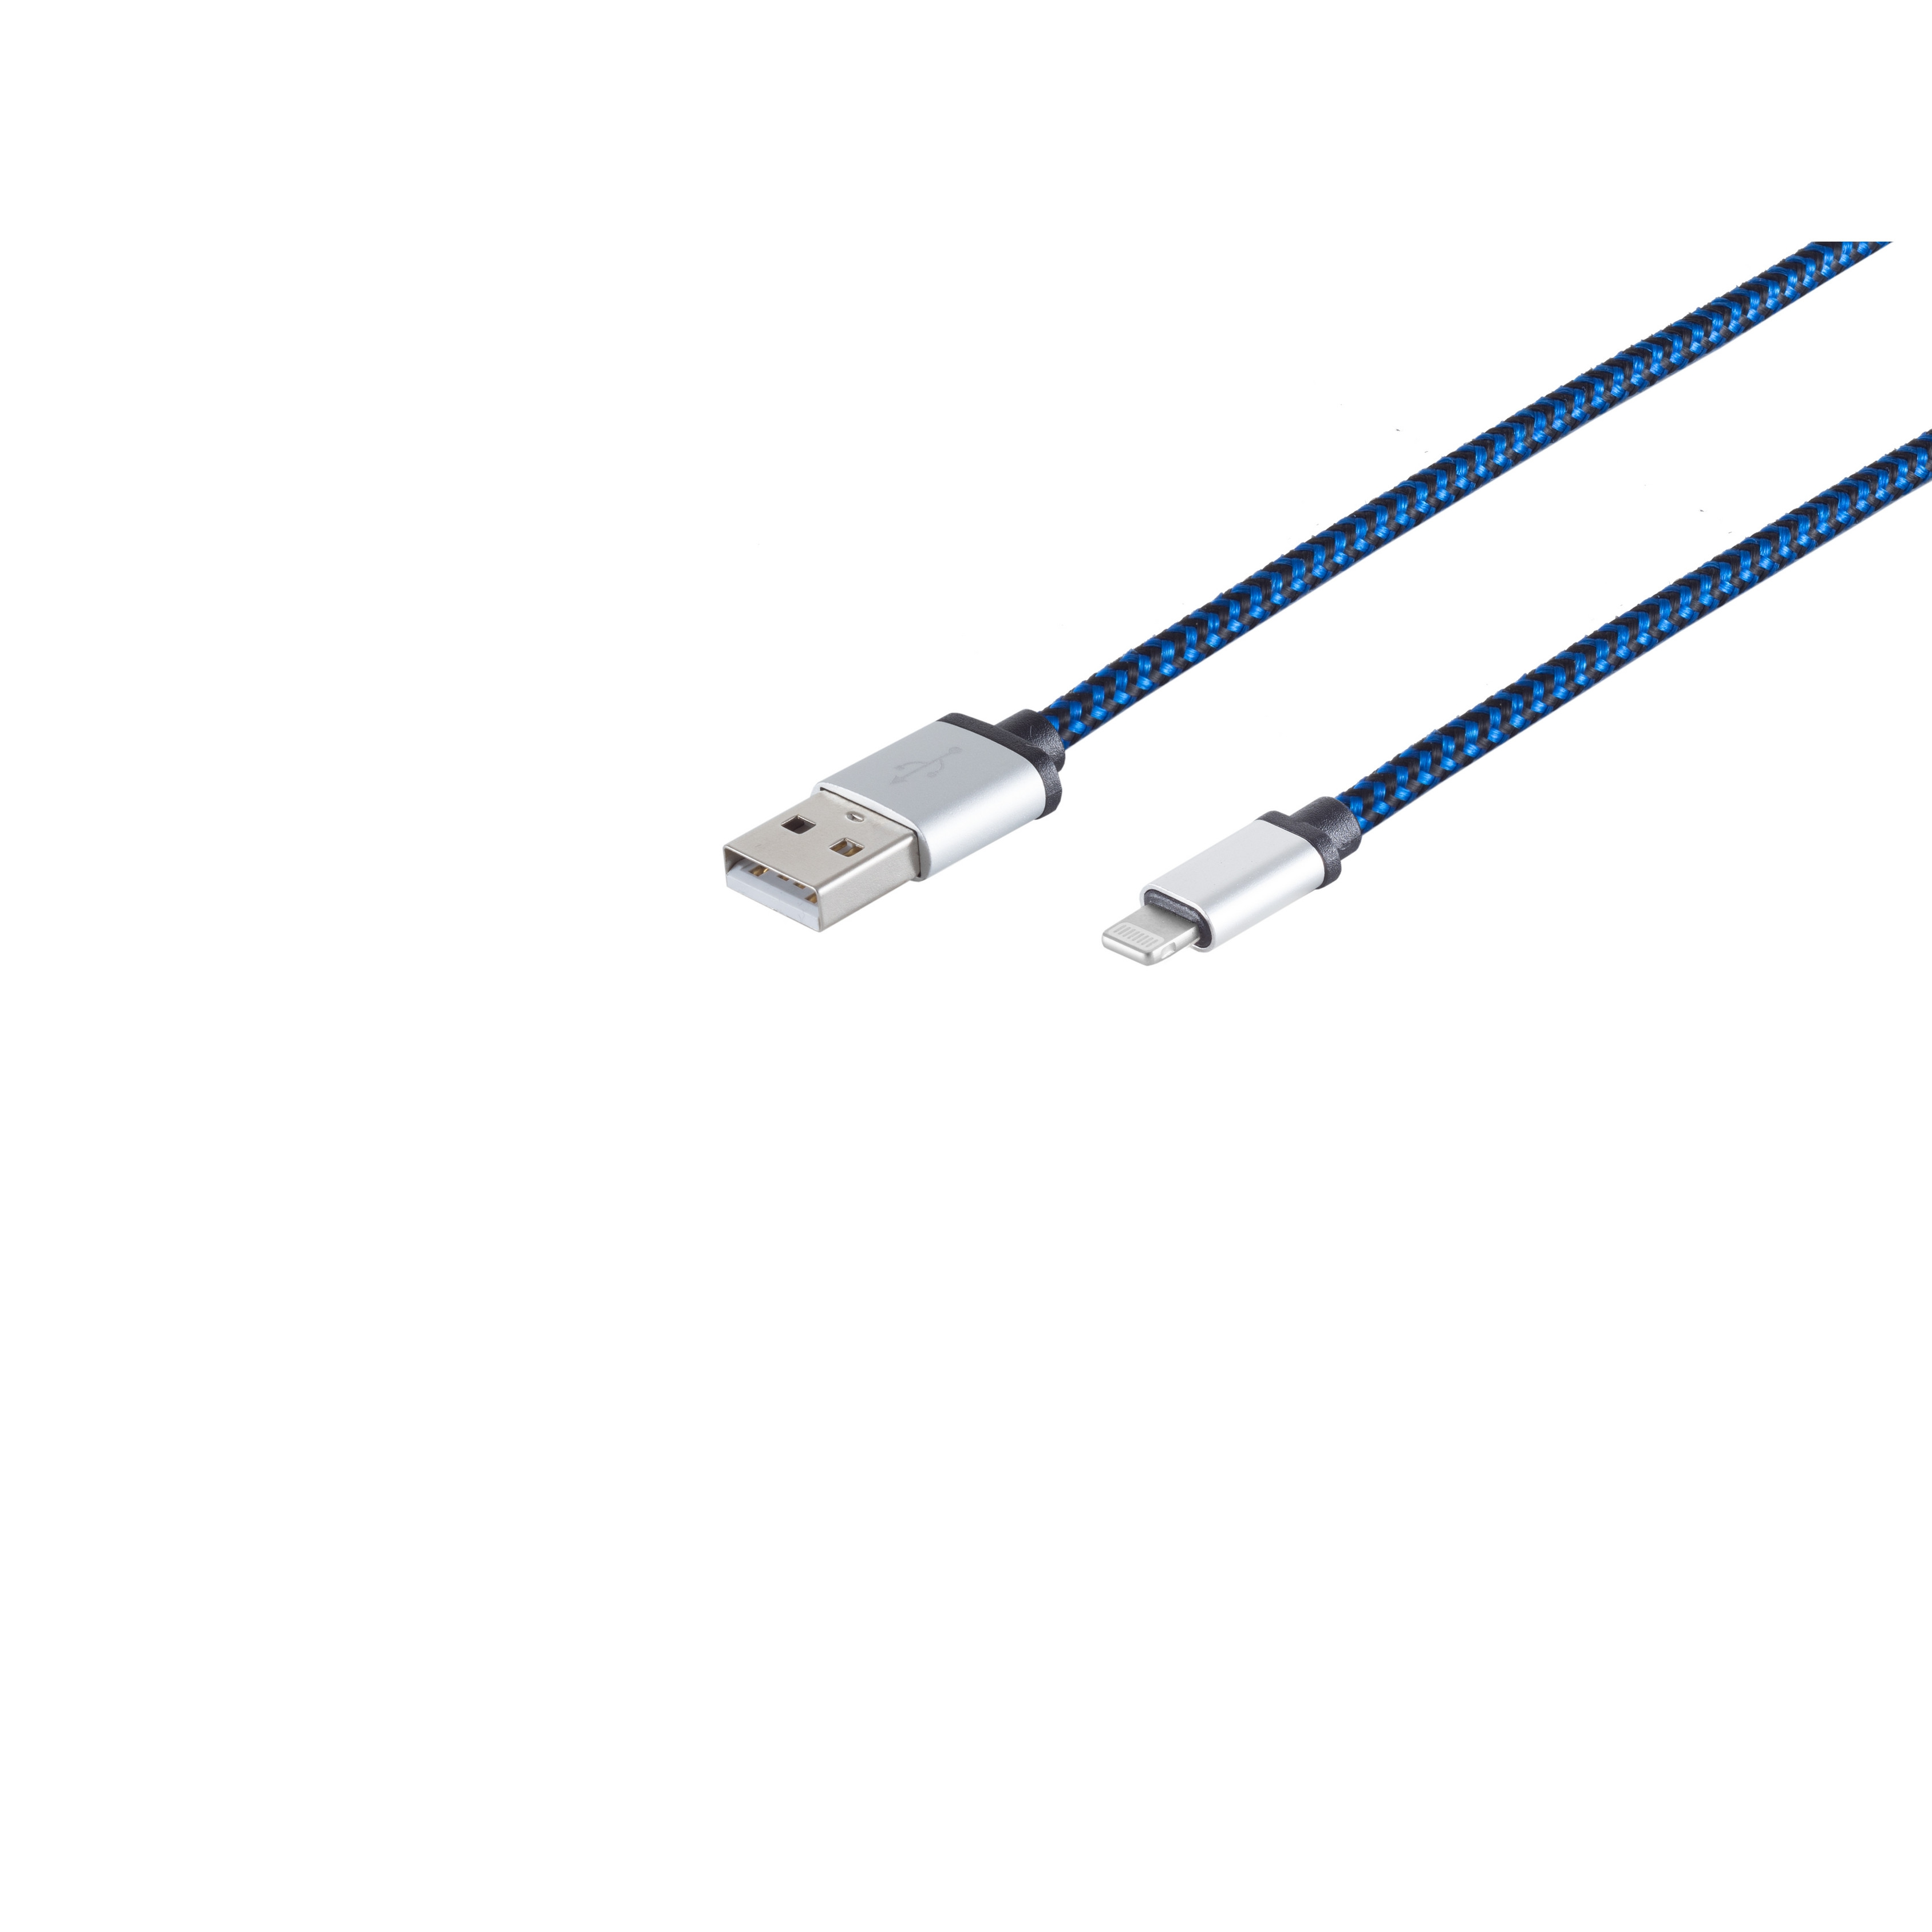 A Stecker Stecker 8-pin auf USB CONNECTIVITY S/CONN USB-Ladekabel 0,3m Kabel MAXIMUM